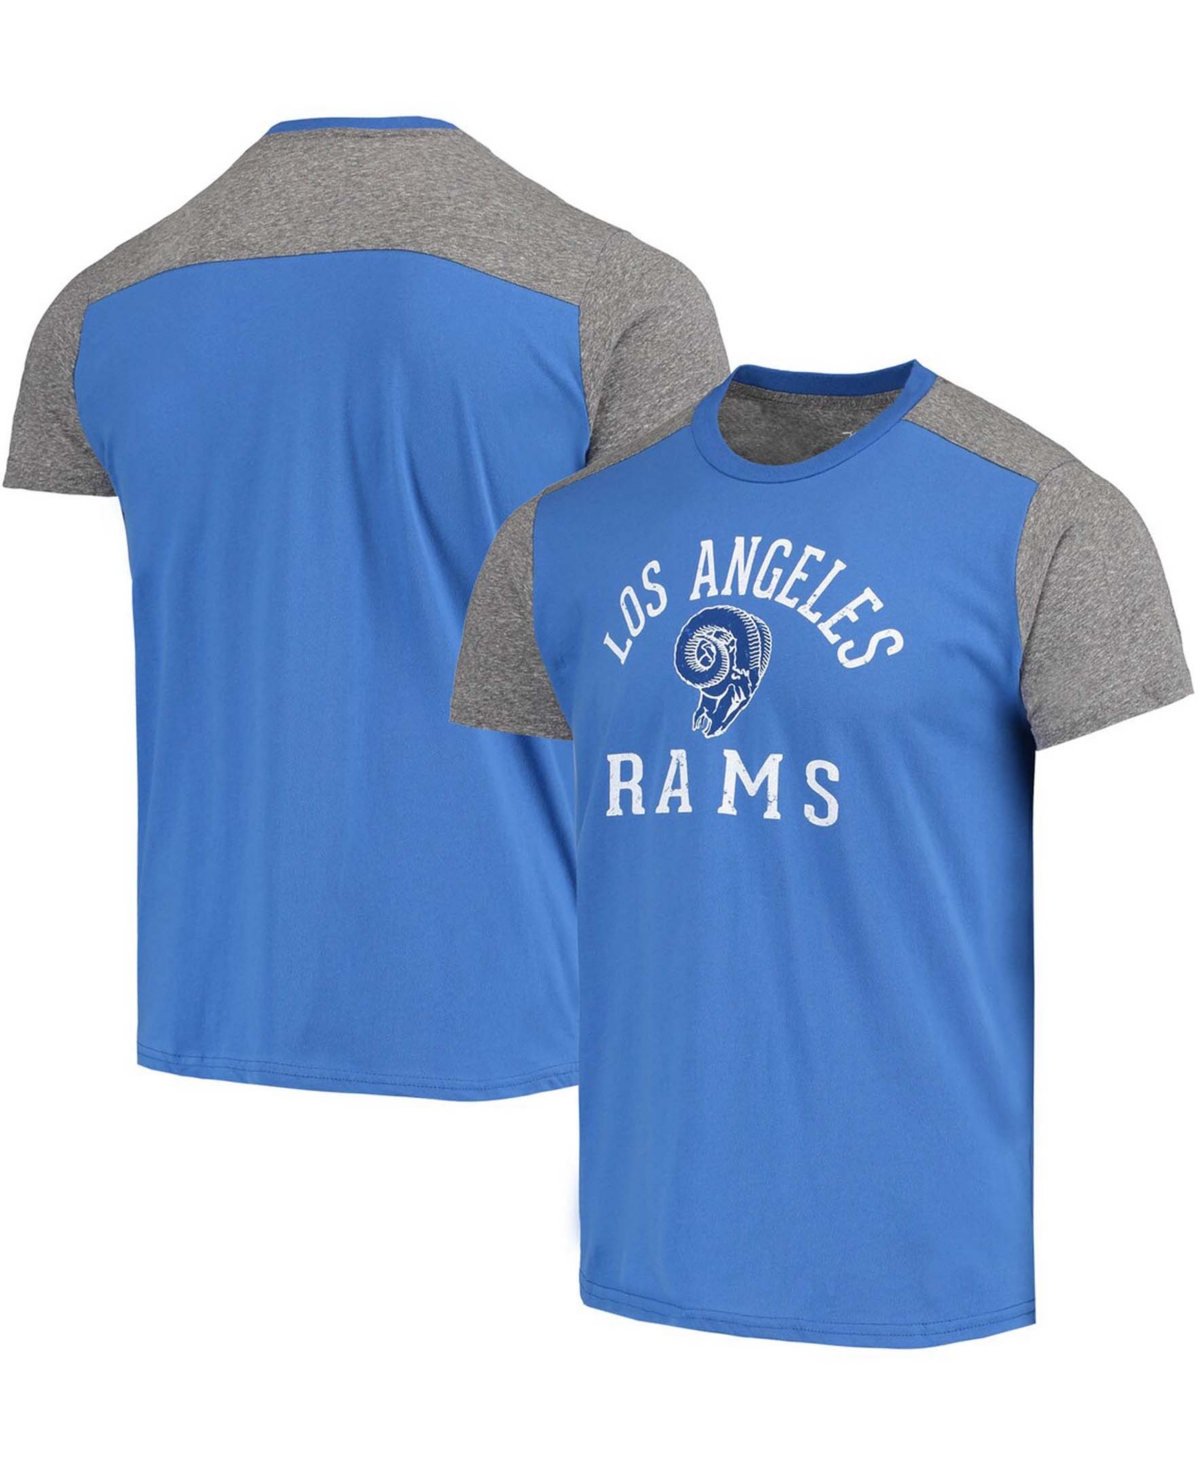 Men's Royal, Heathered Gray Los Angeles Rams Gridiron Classics Field Goal Slub T-shirt - Royal, Heathered Gray